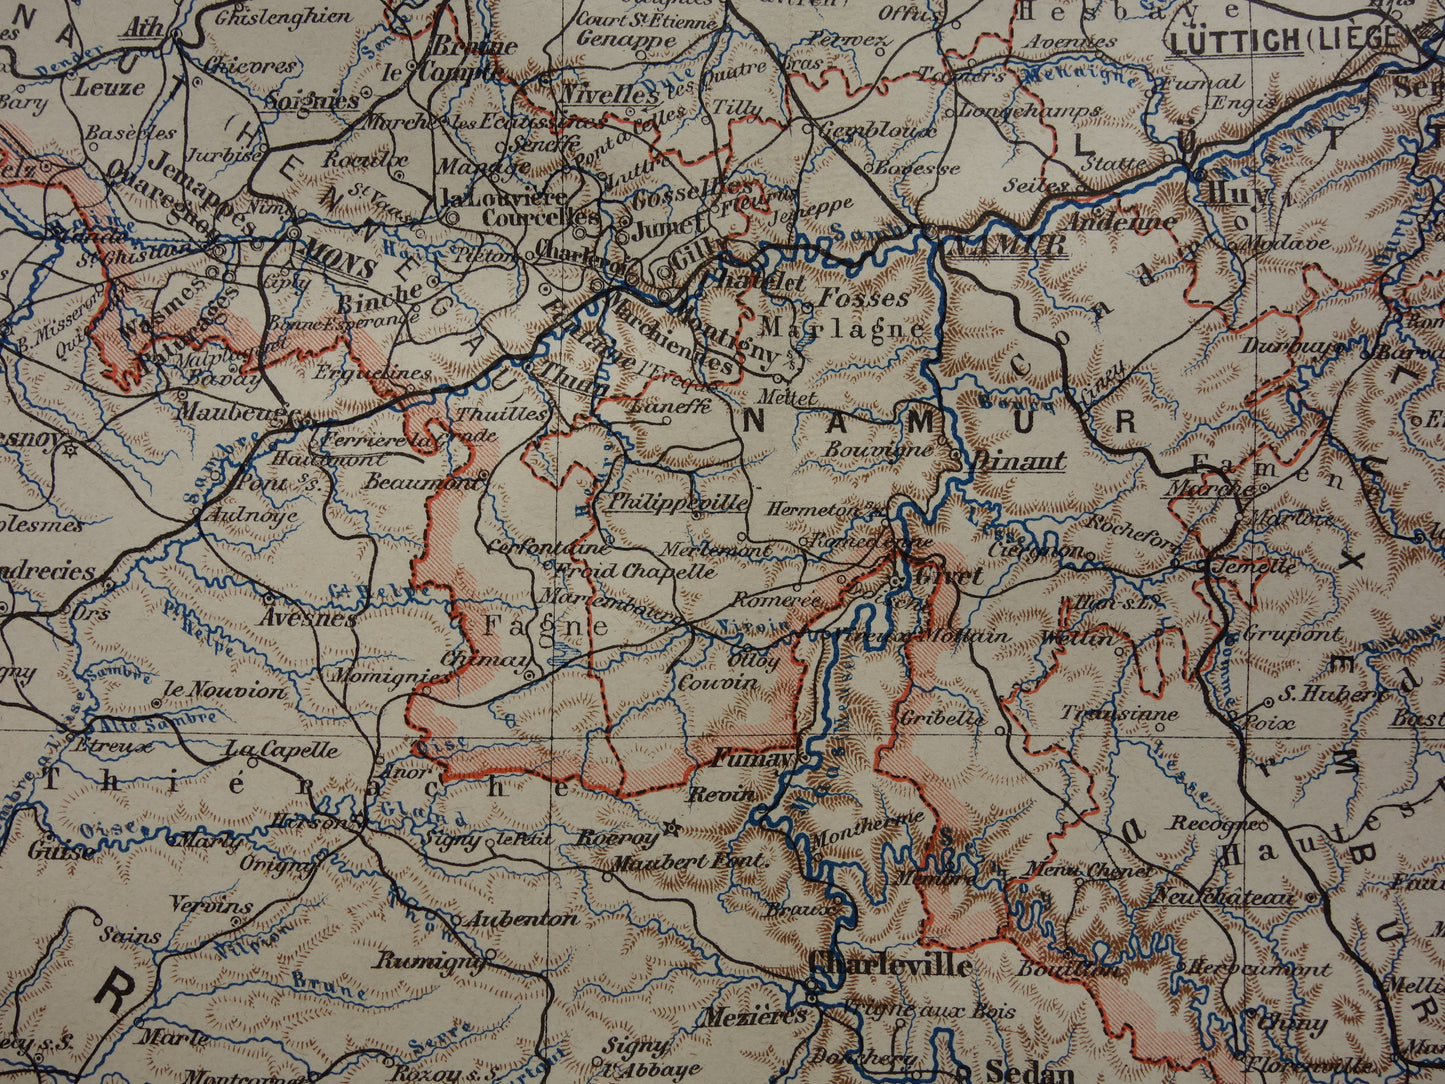 BELGIË oude kaart van België 1893 originele antieke Duitse gedetailleerde landkaart taalgrens